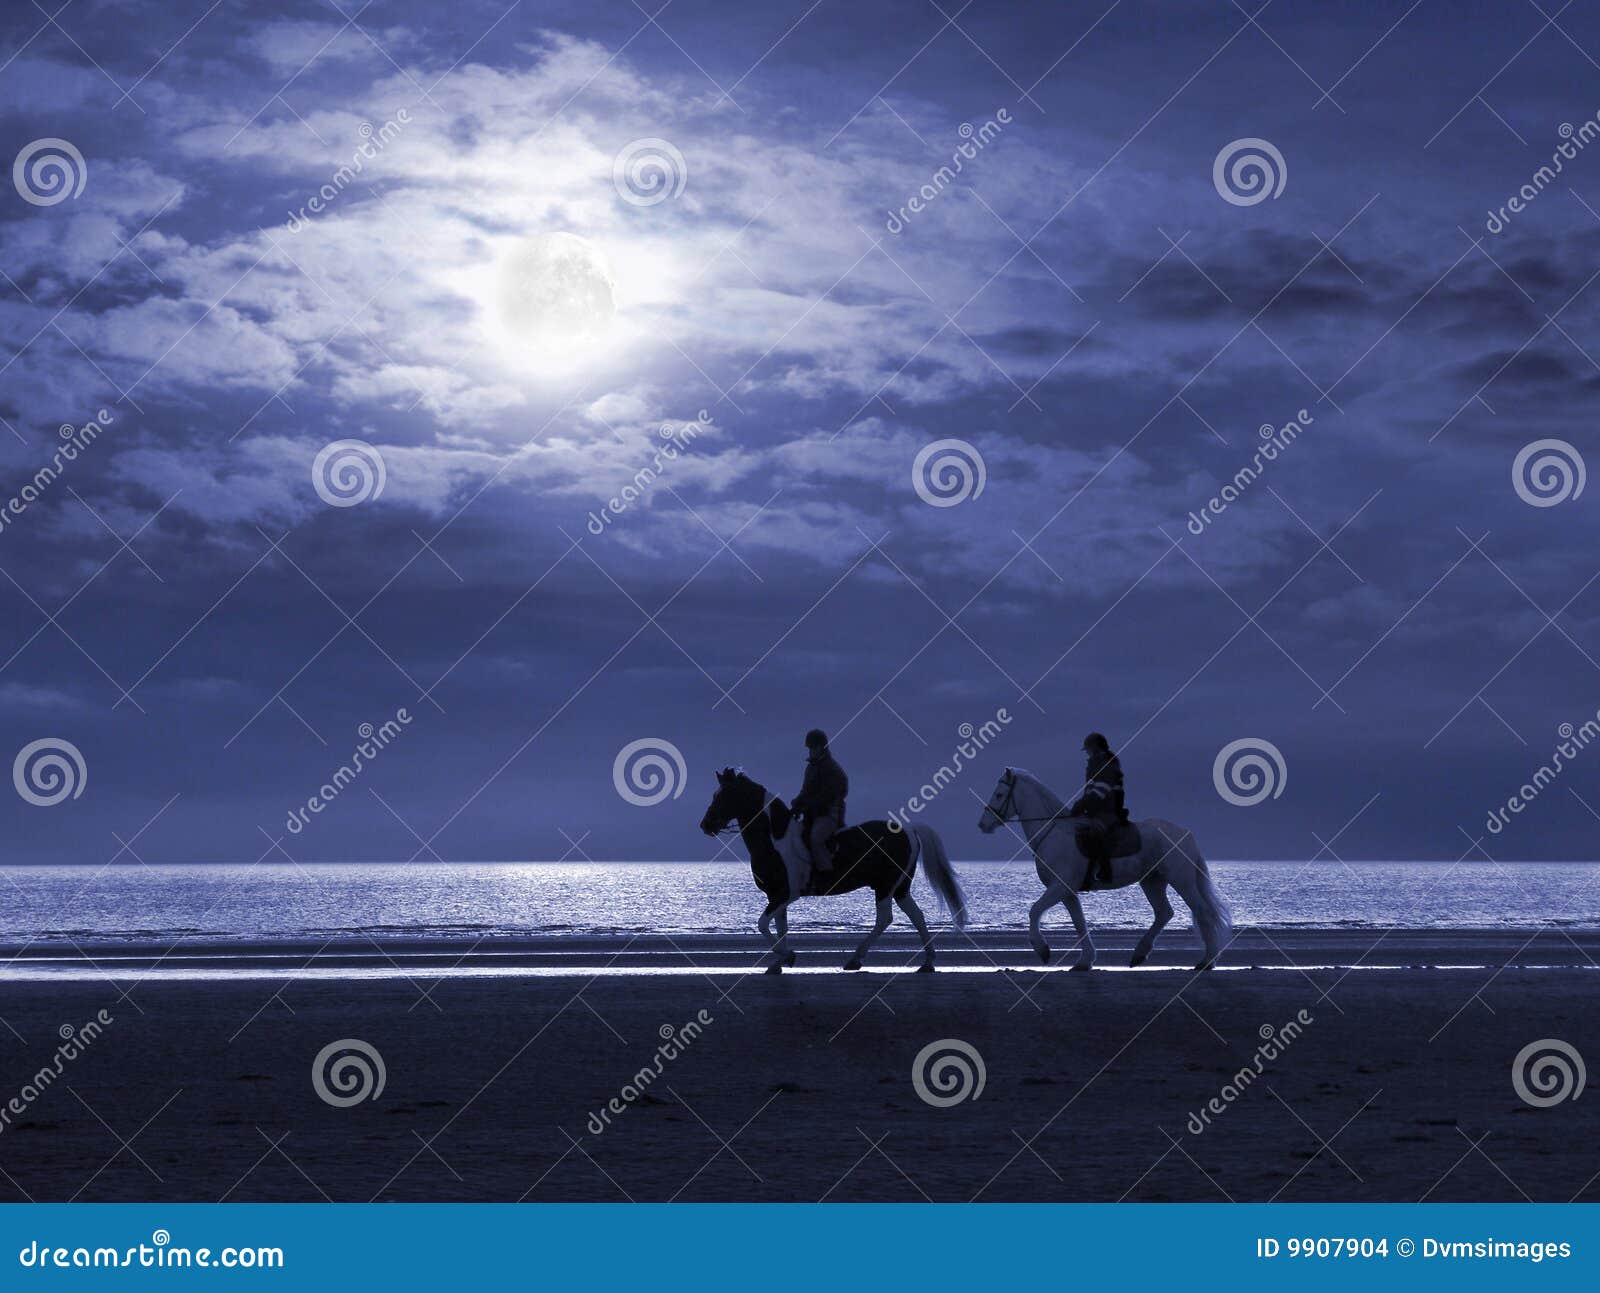 moonlit beach and horseriders